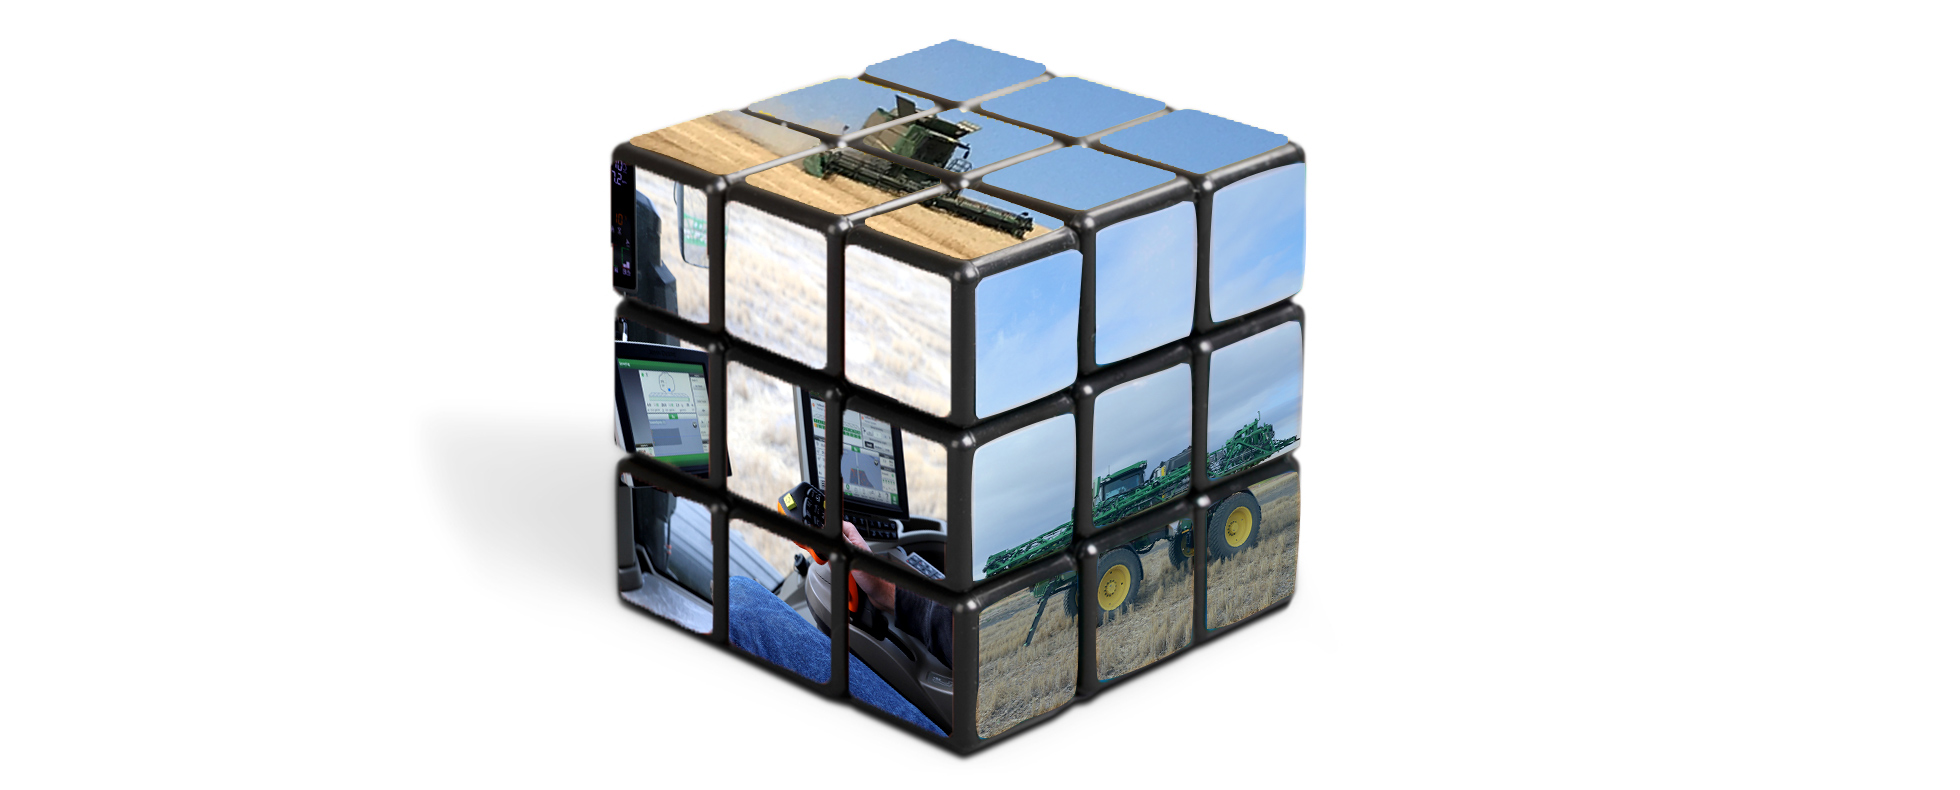 What the Rubik’s Cube Can Teach Us About Precision Farming